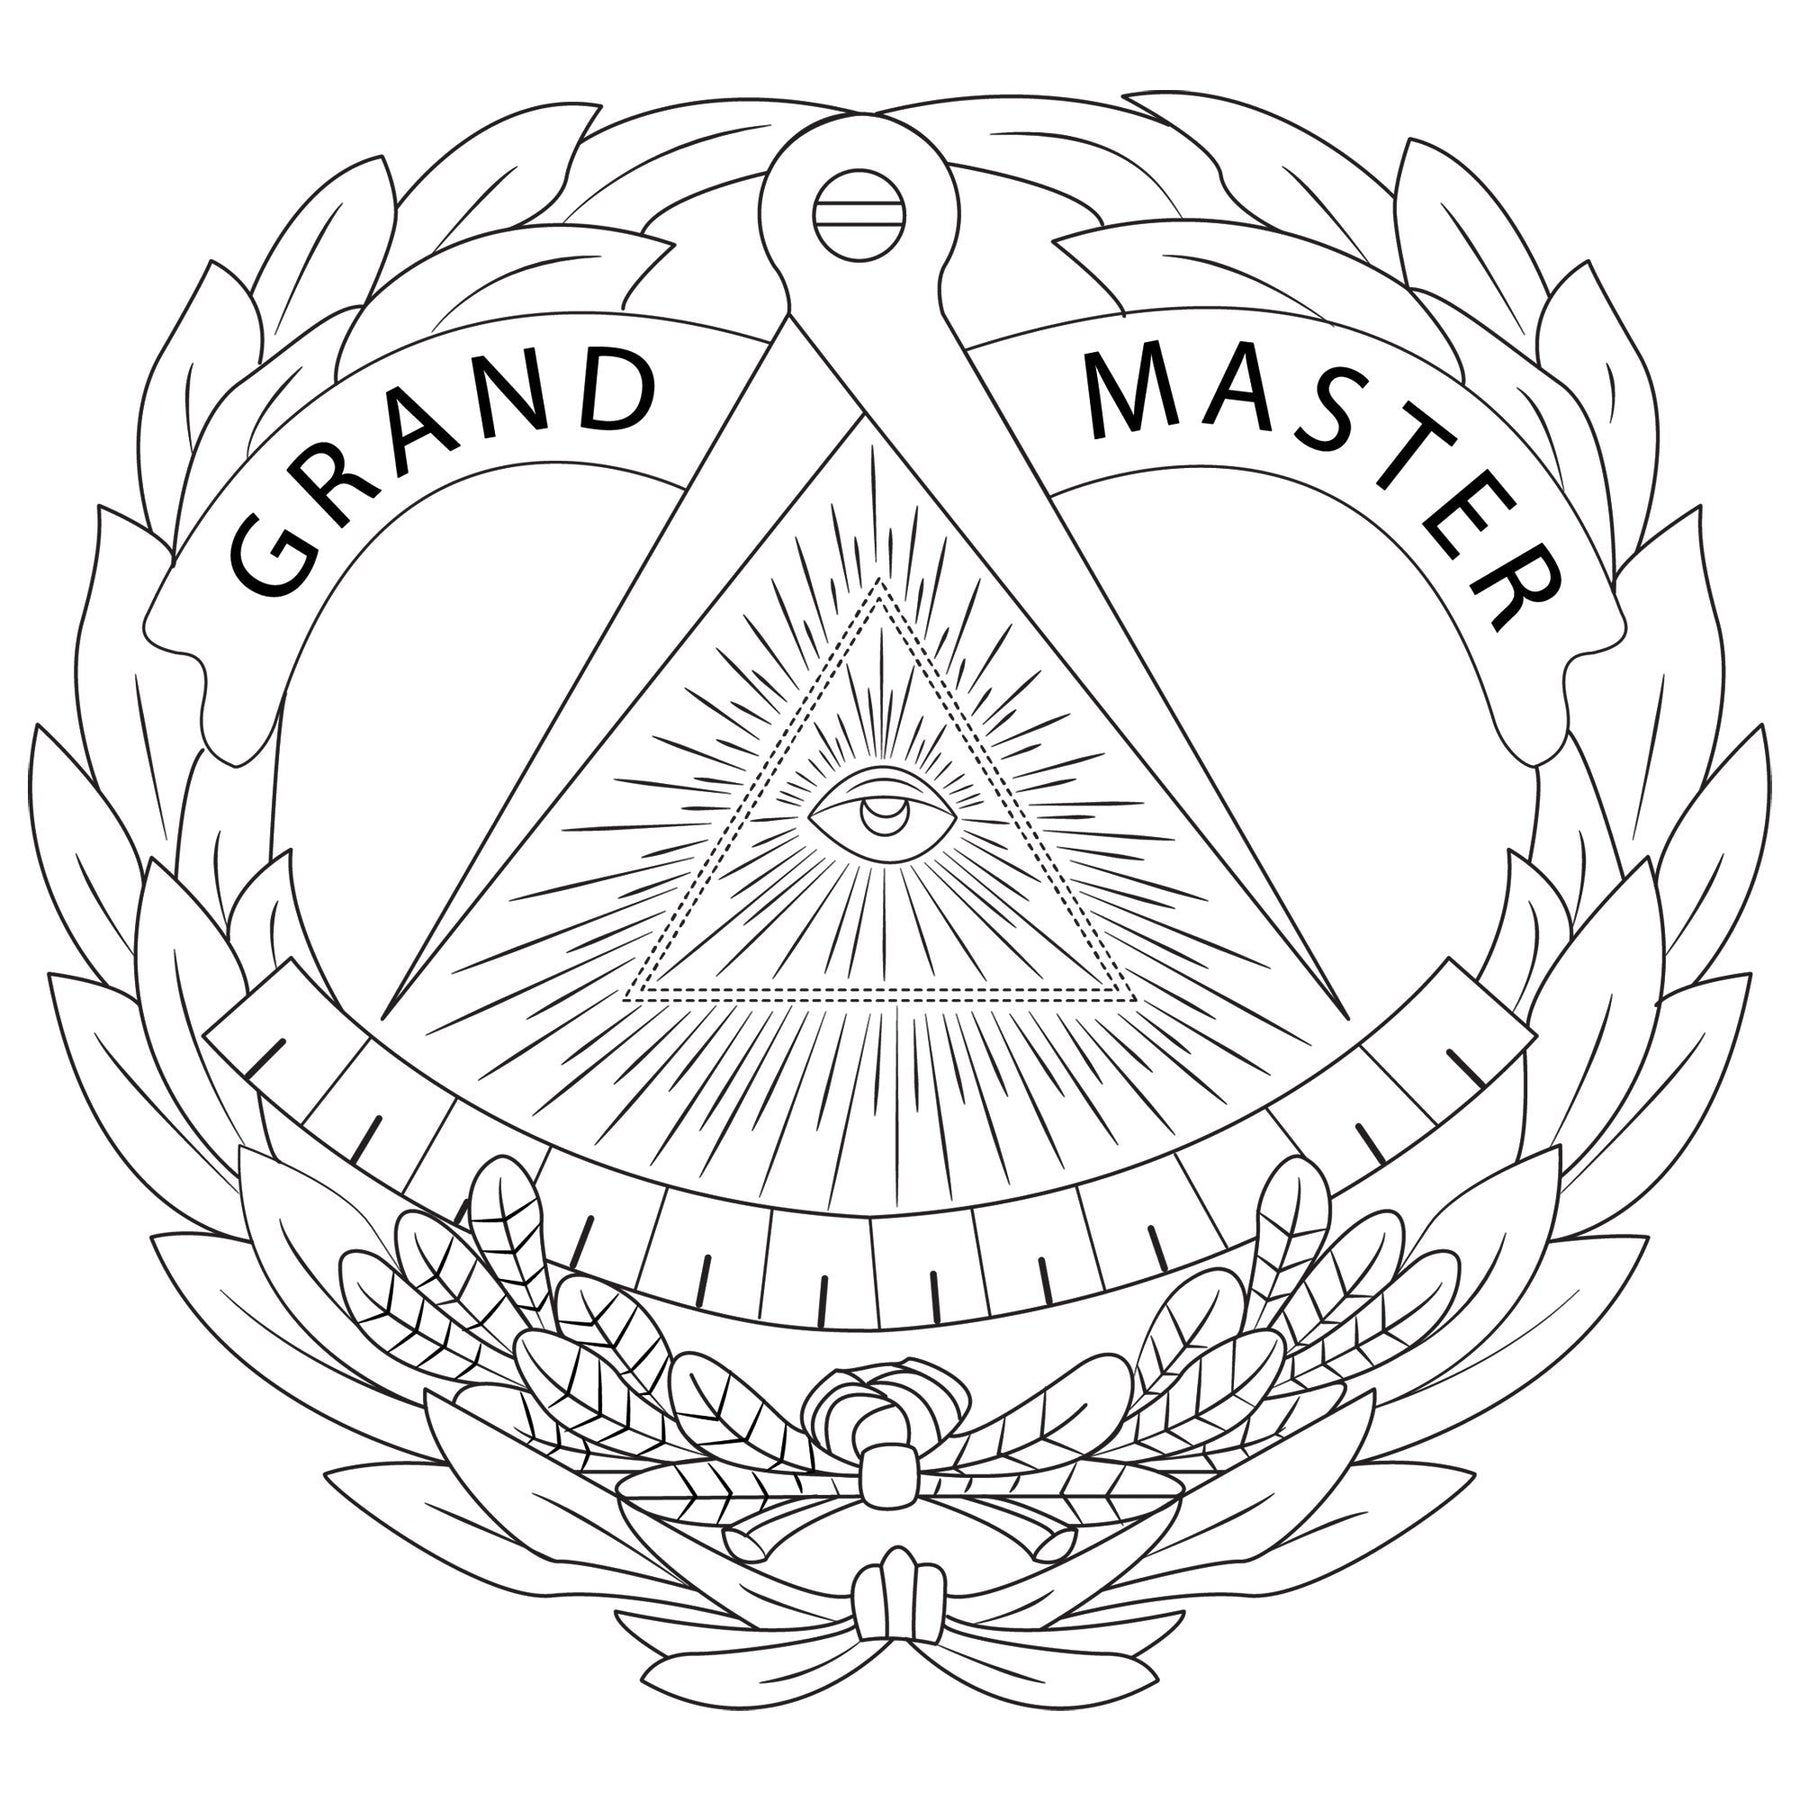 Grand Master Blue Lodge Travel Bag - Genuine Leather - Bricks Masons